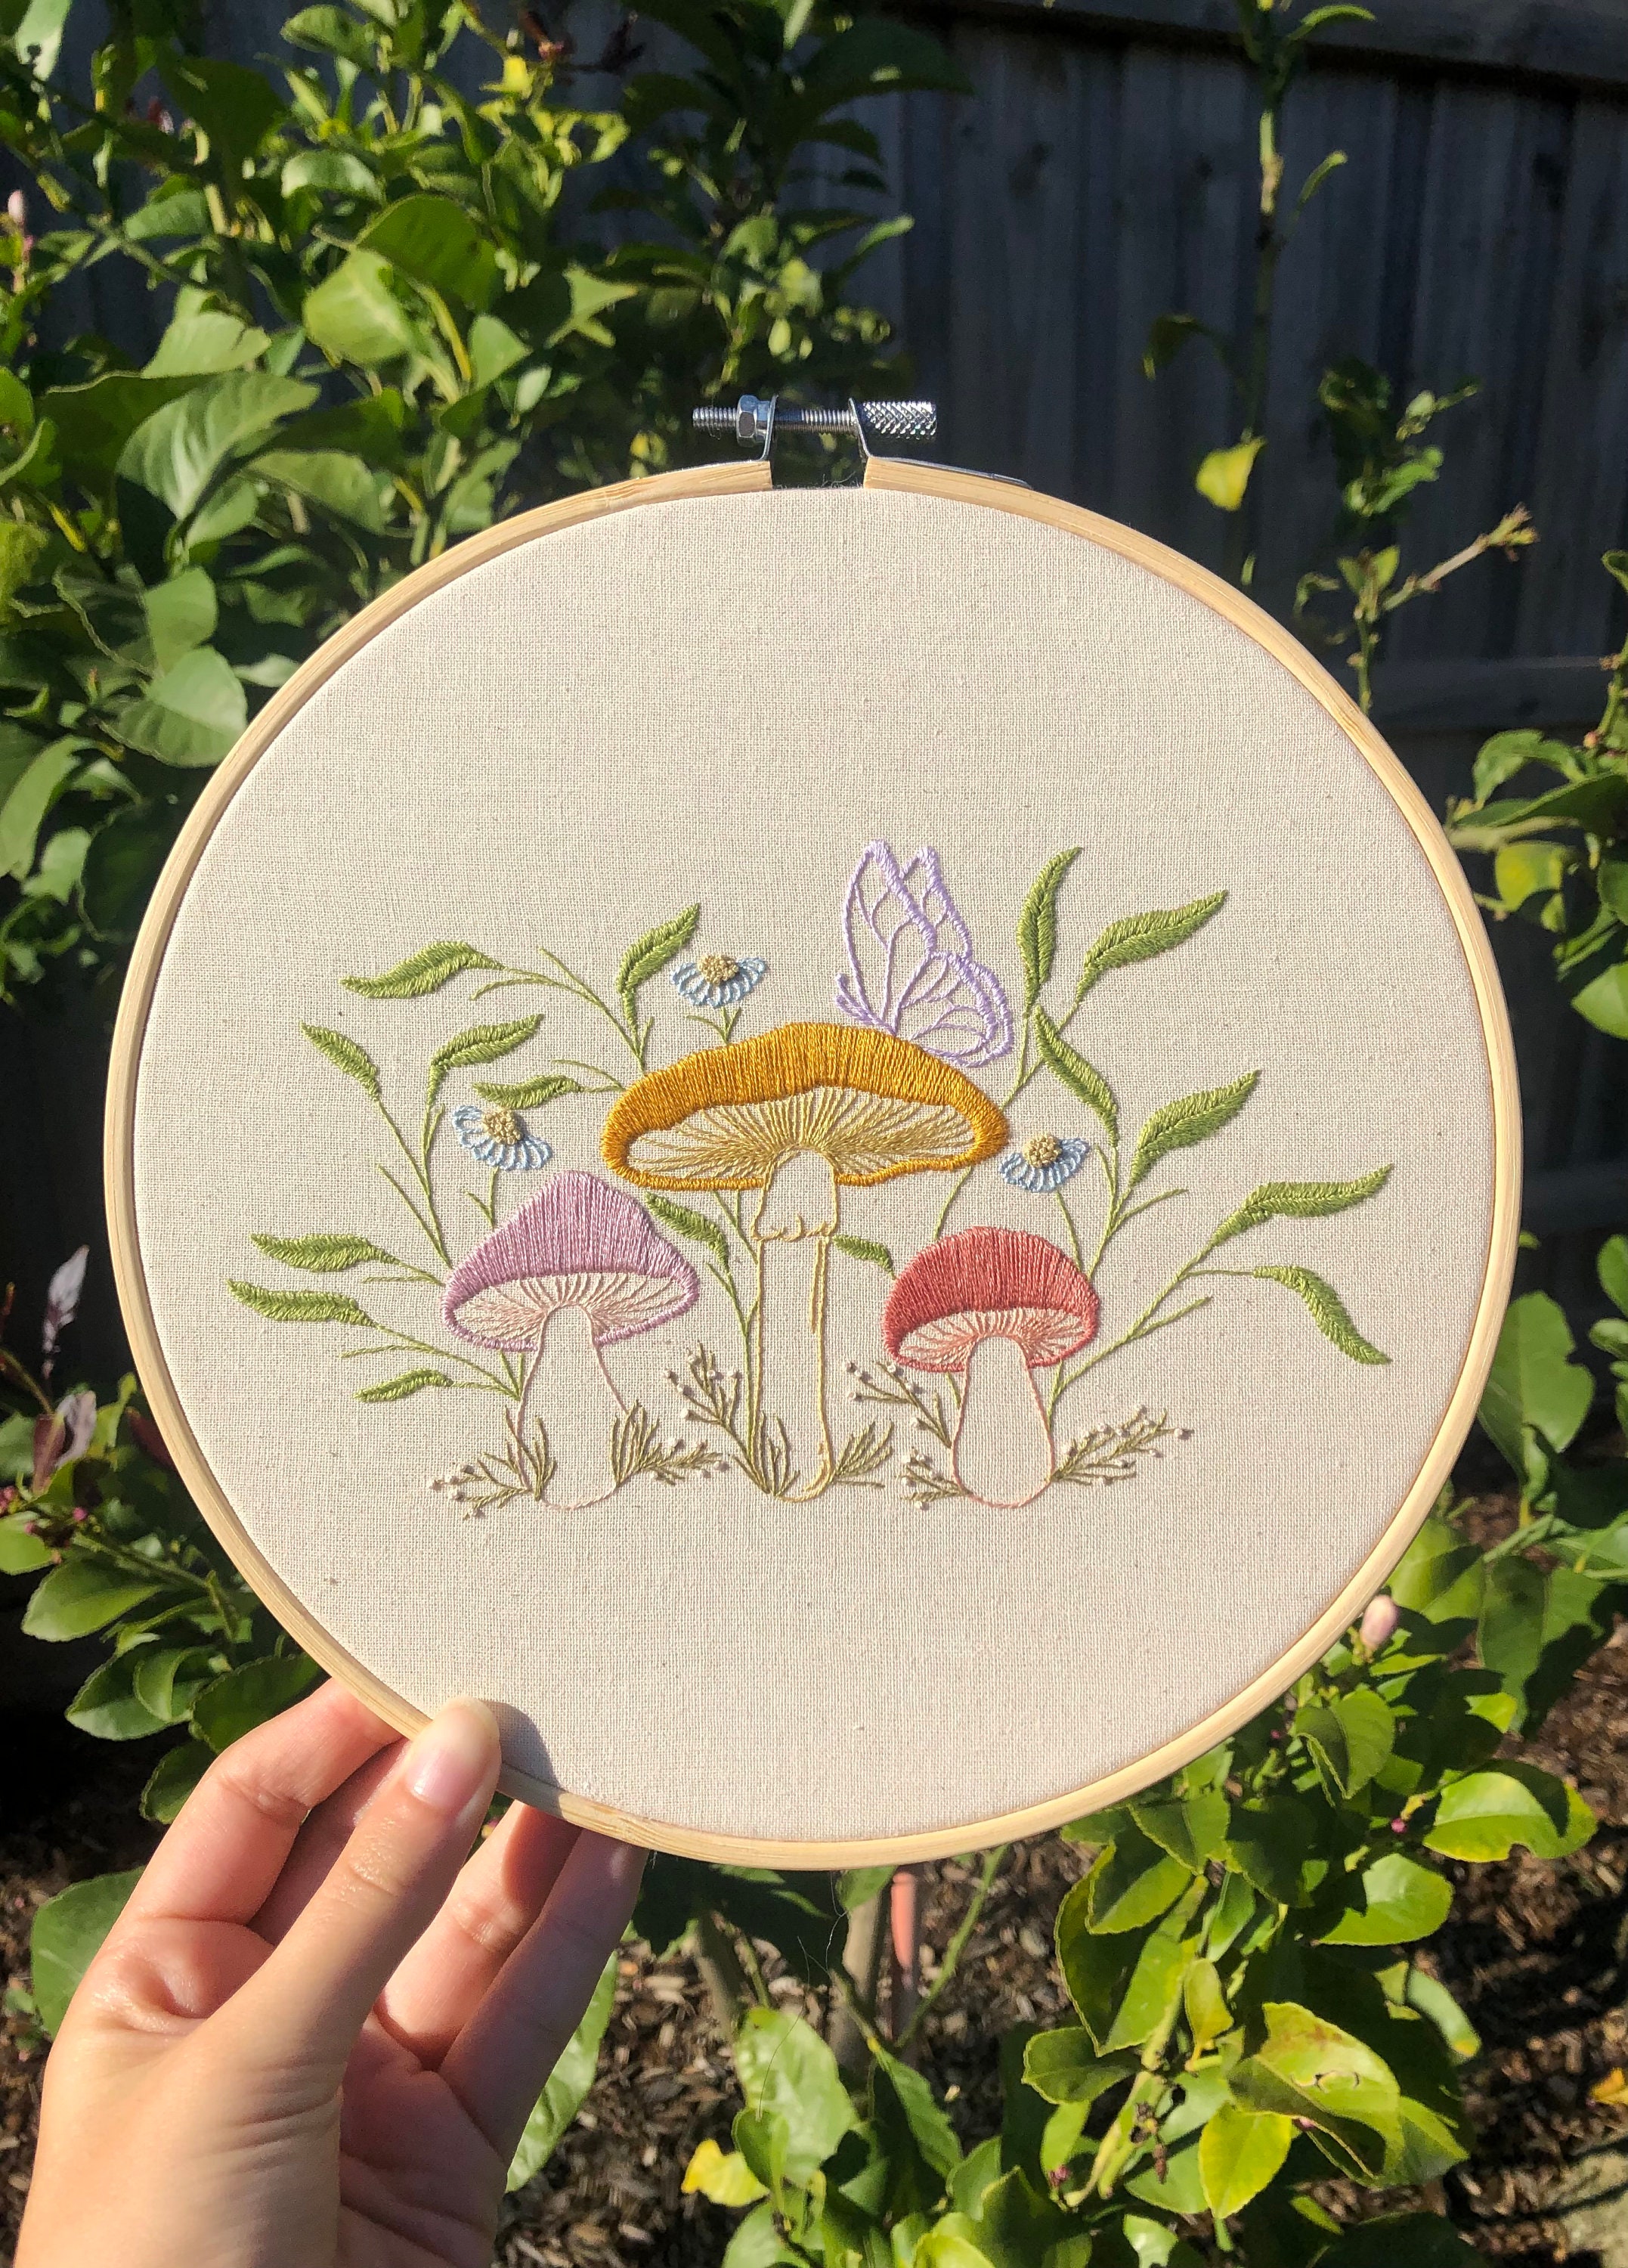 DIY Craft-Mushroom Birthday gift -Handmade Embroidery - Embroidery Kit -  Flower Embroidery-Embroidery- Party gift- Kids Craft-Needlework Kit